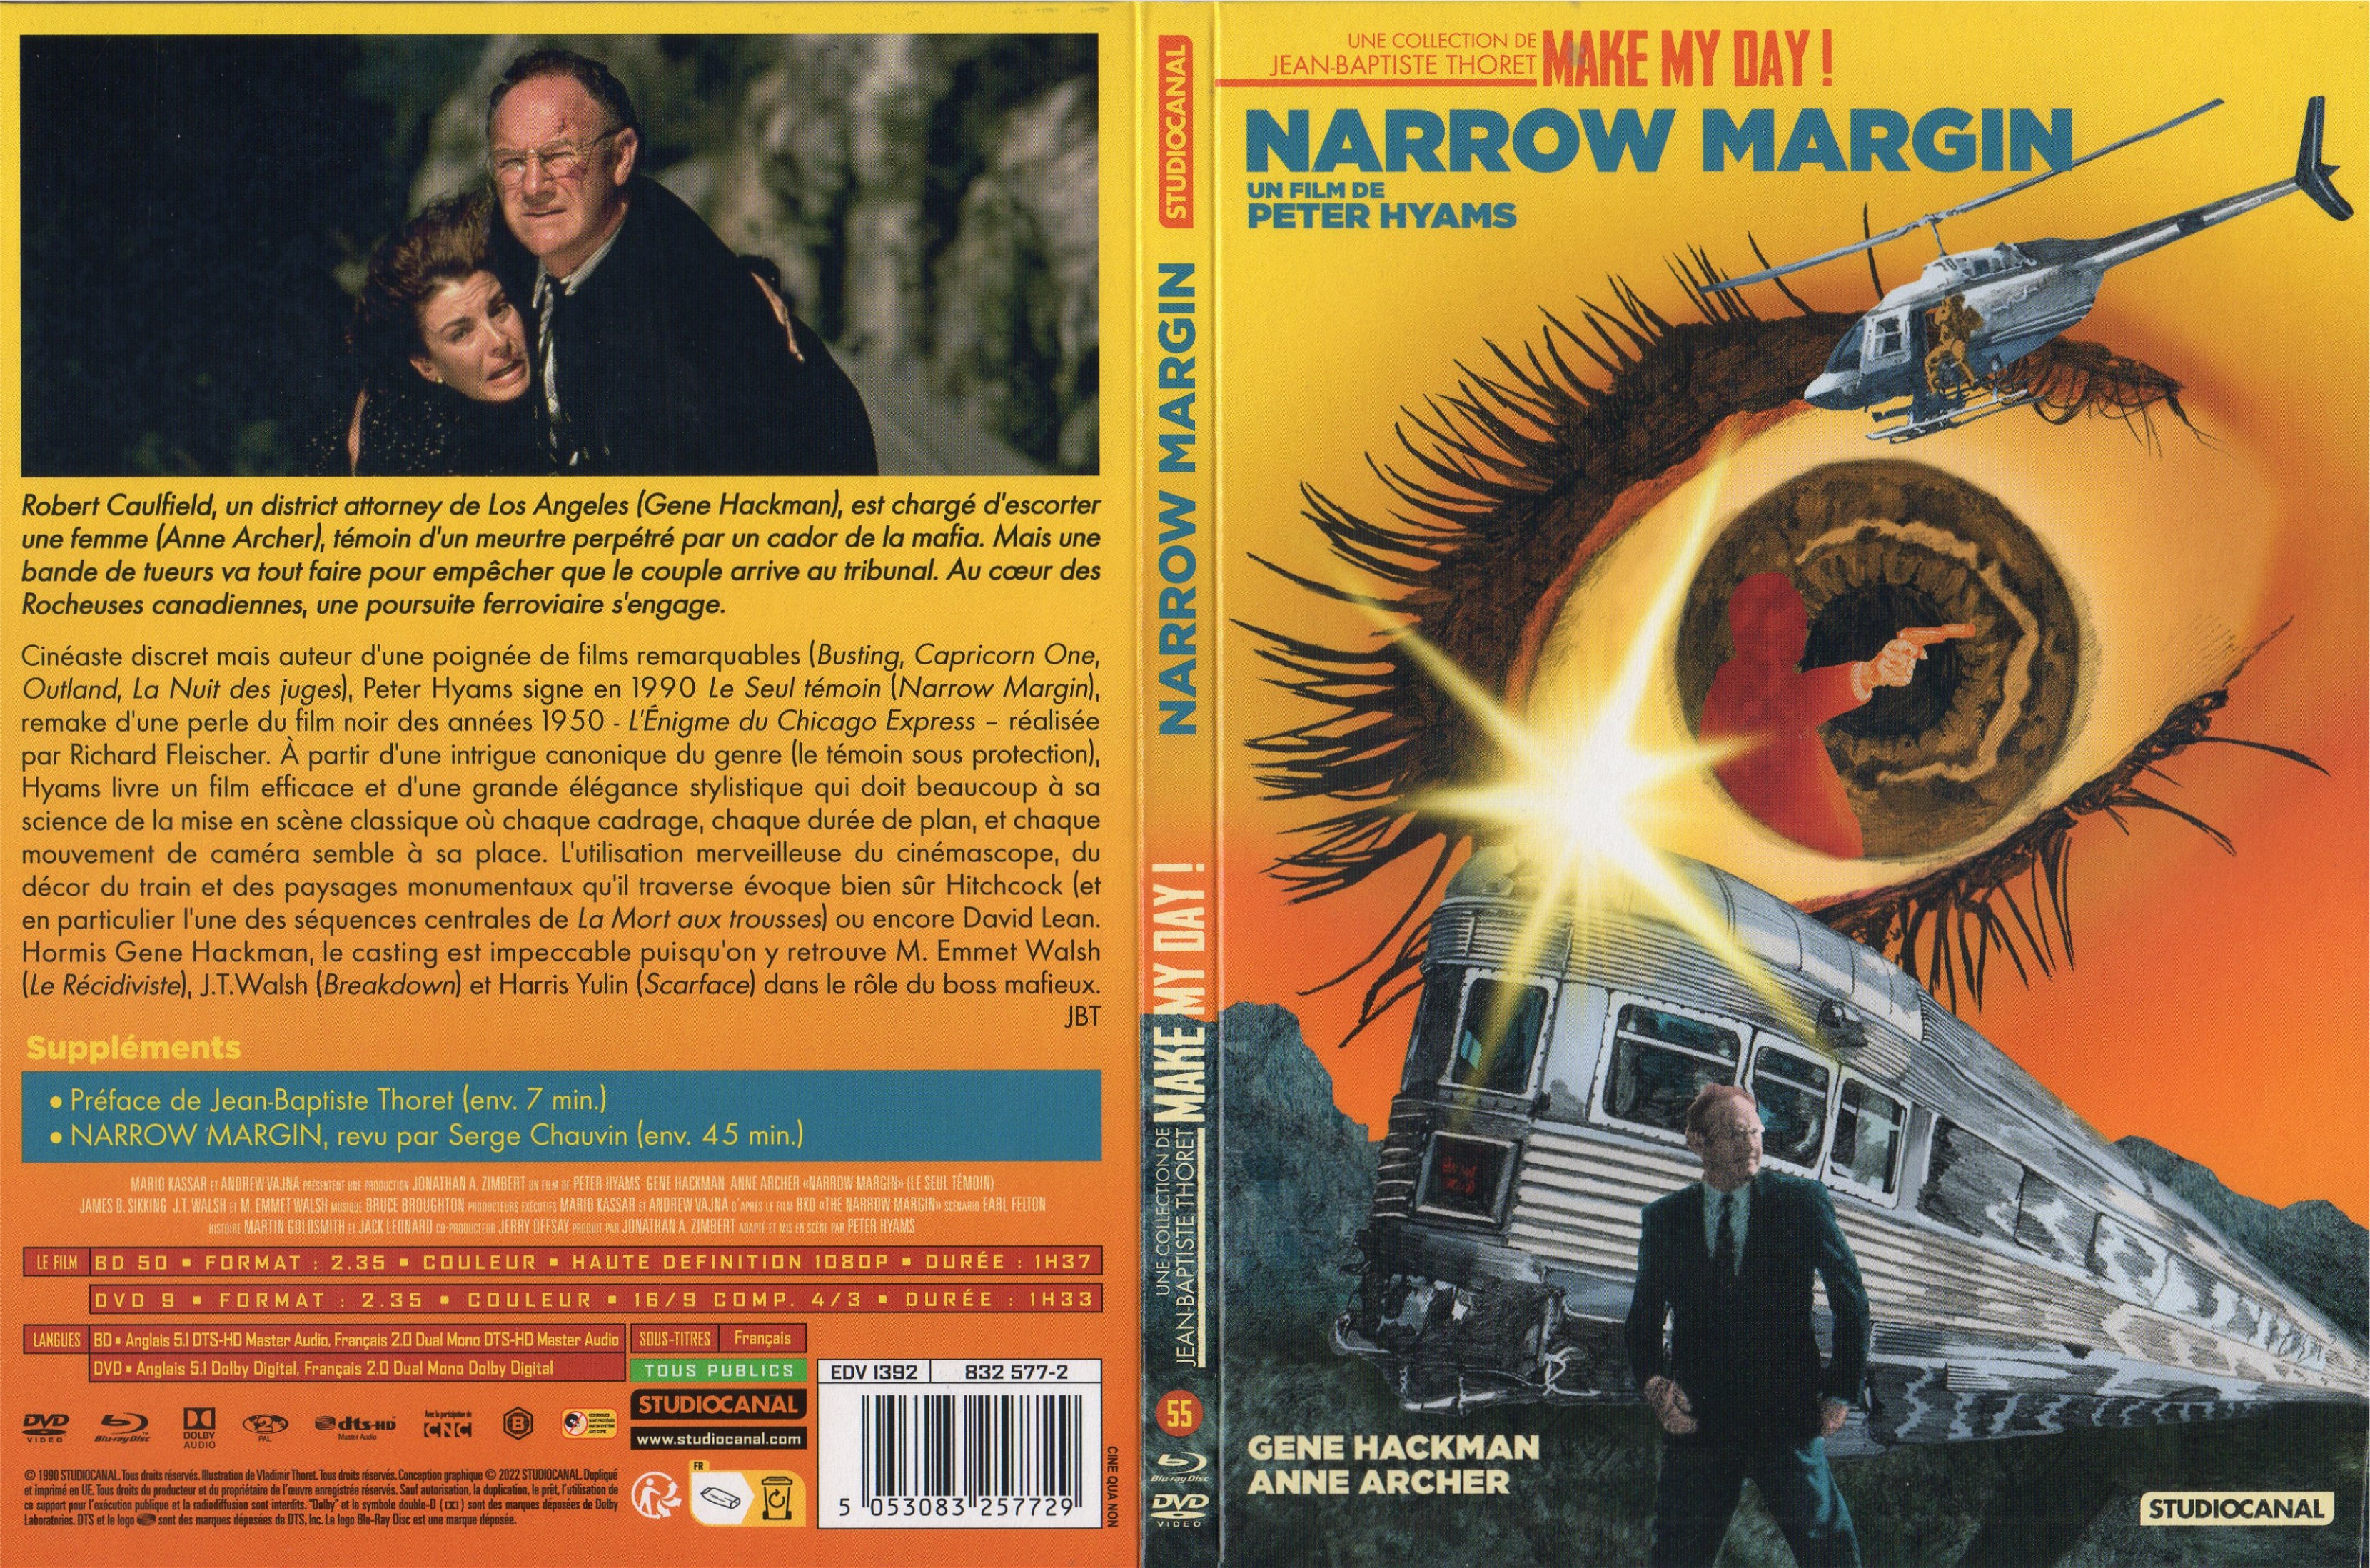 Jaquette DVD Narrow margin - Le Seul tmoin